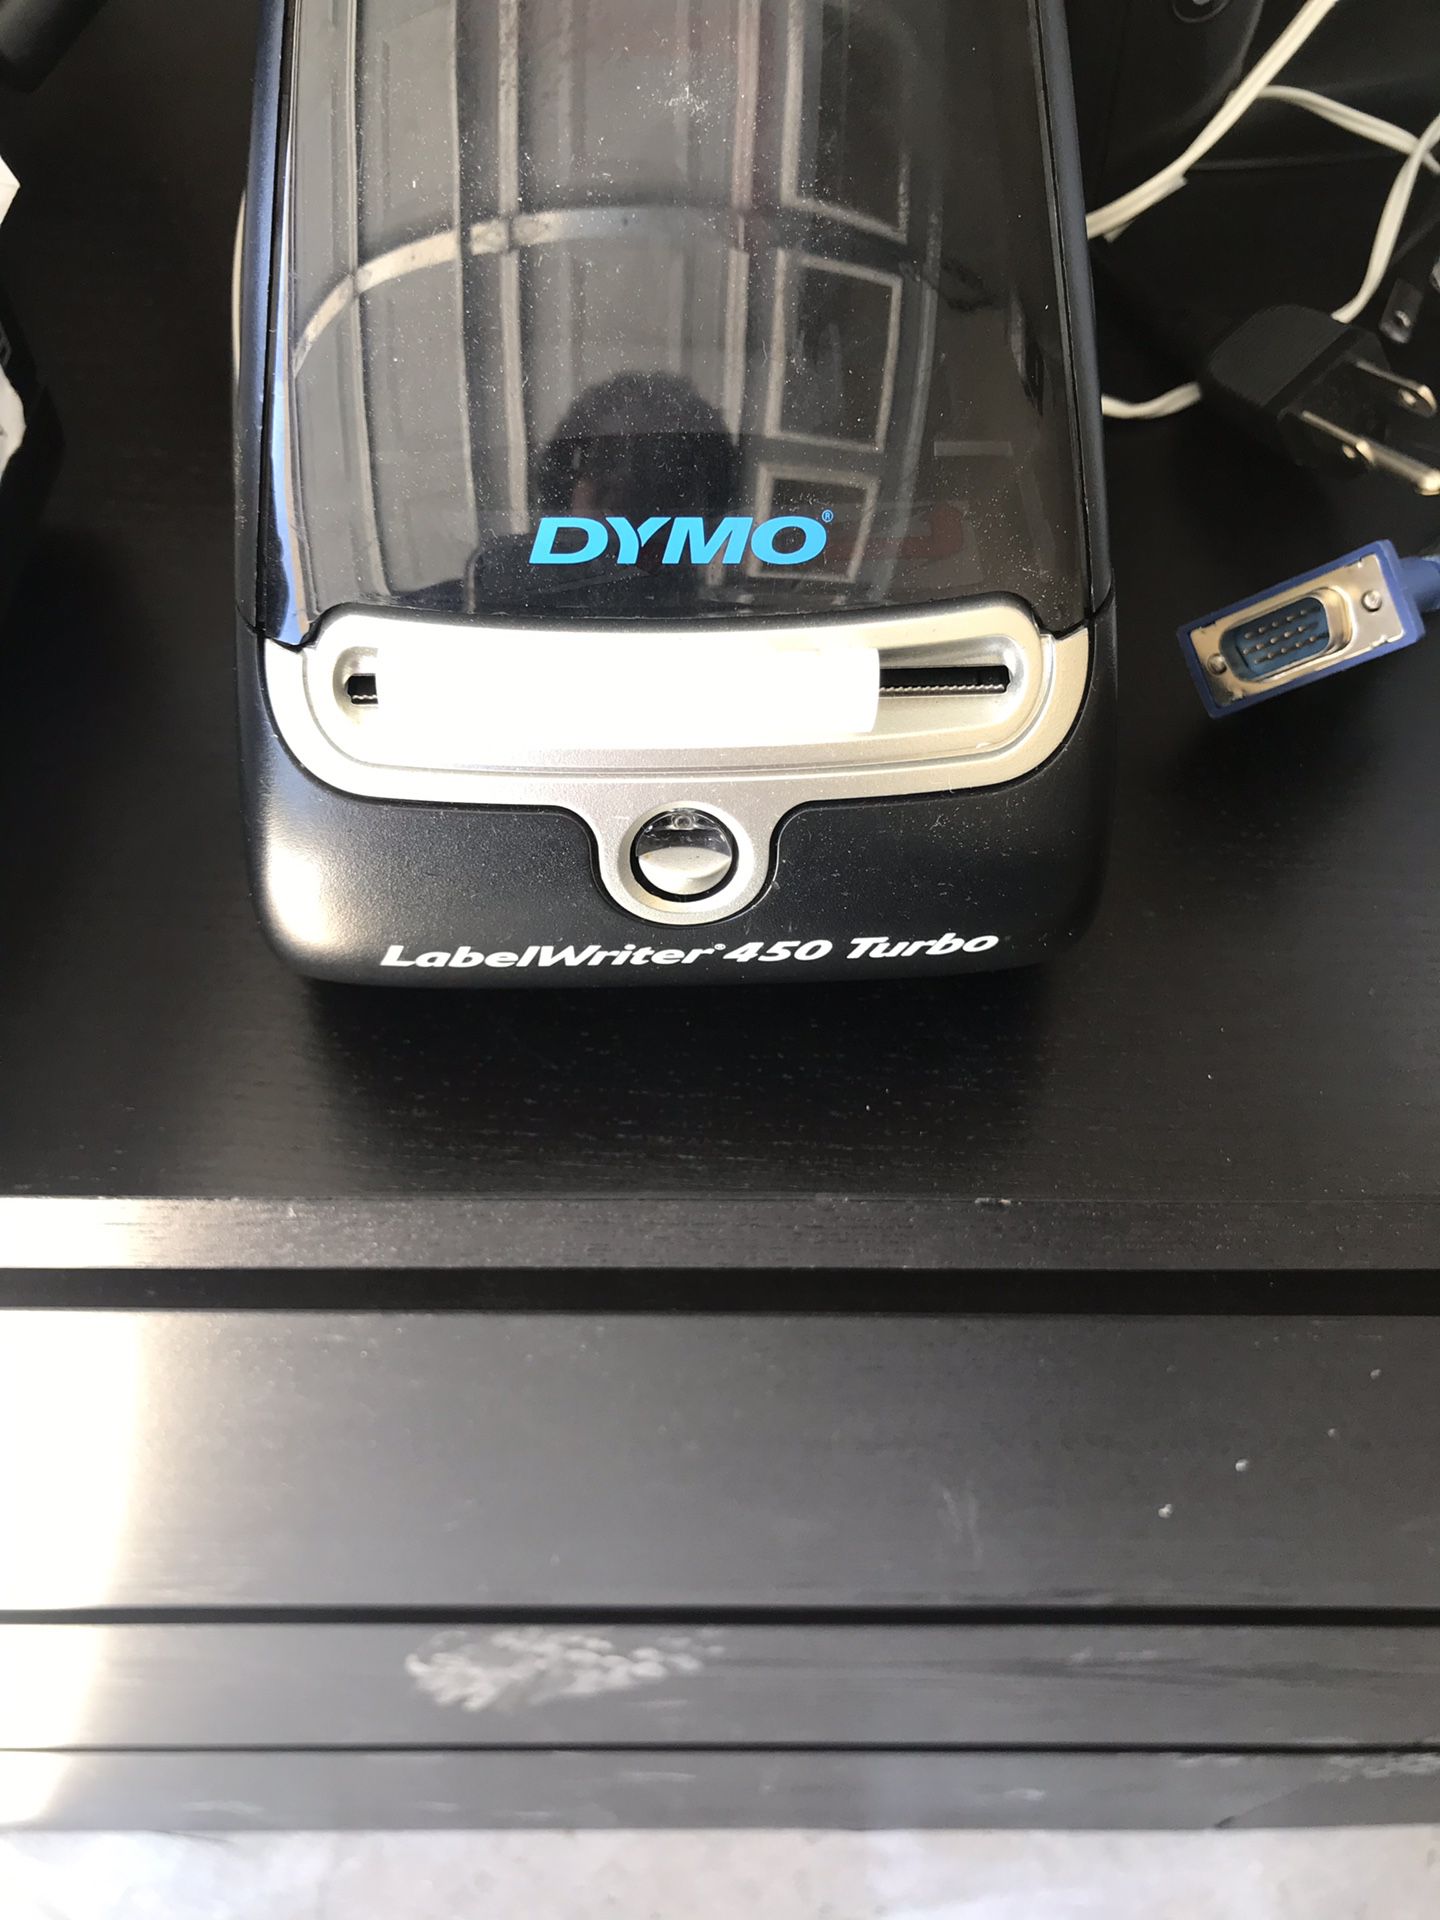 DYMO Label Printer 450